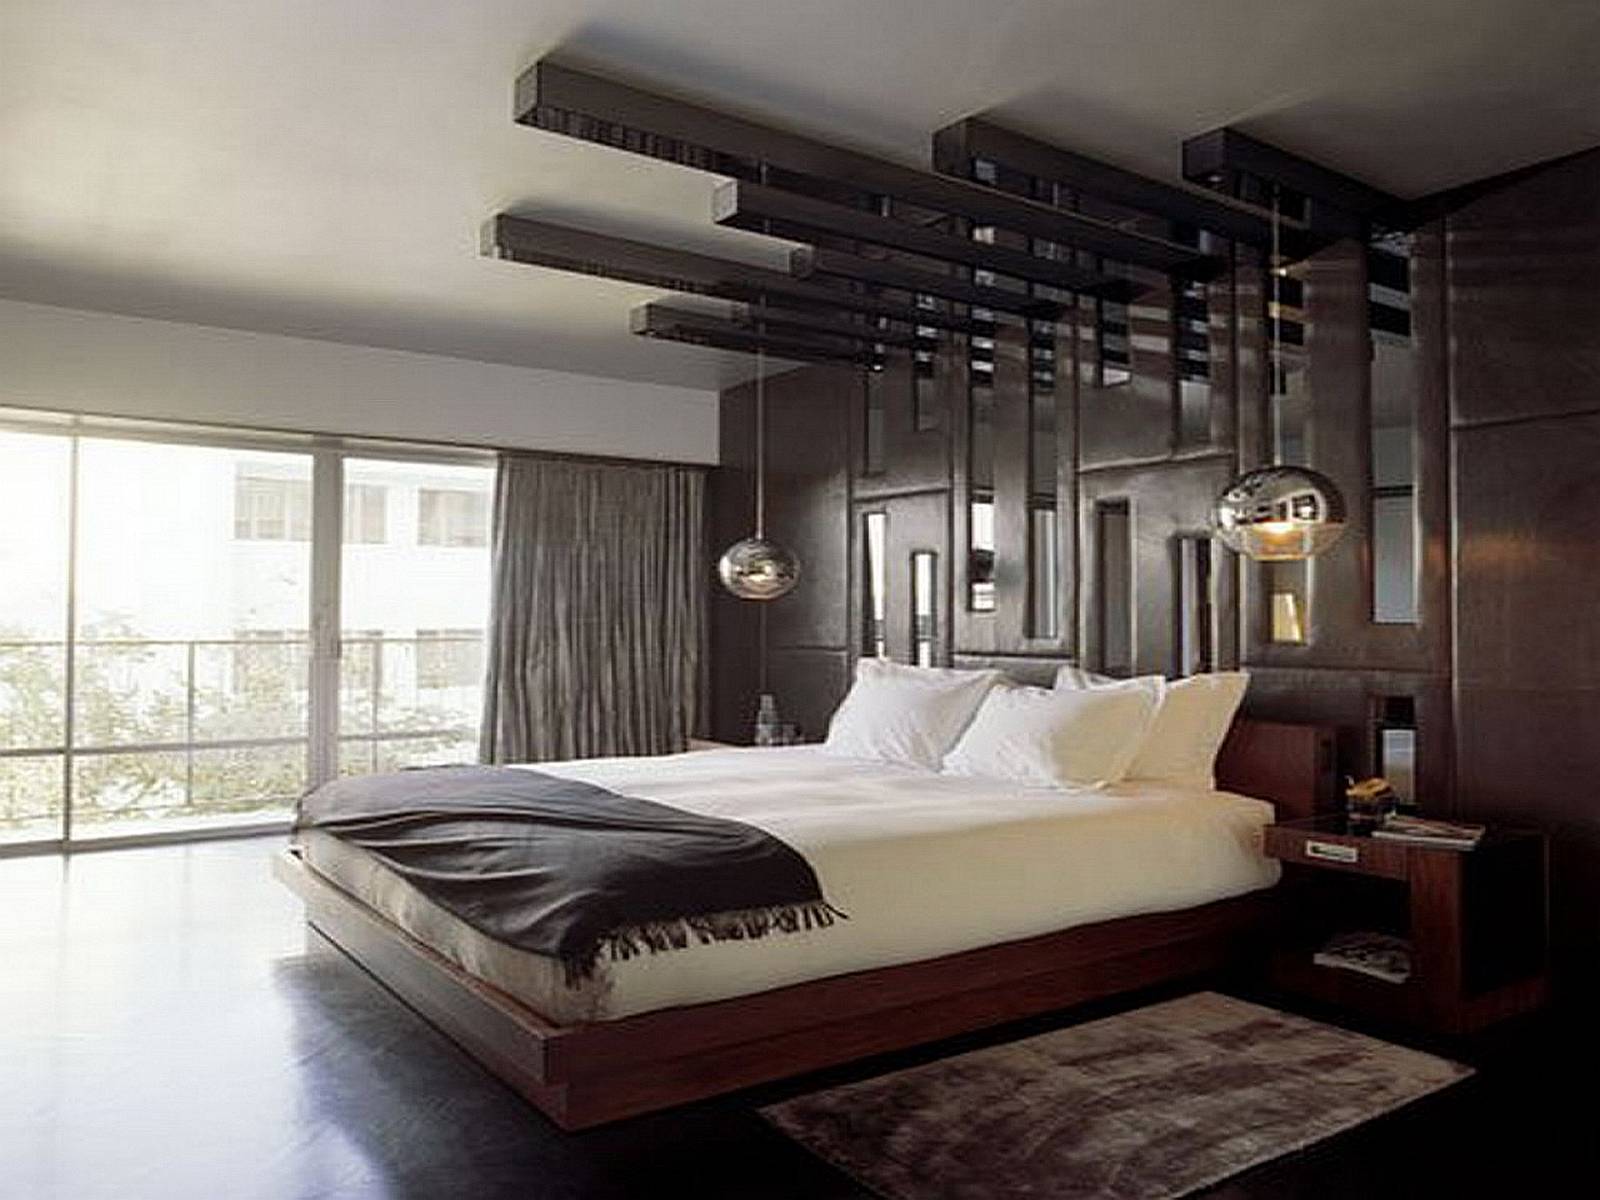 Brilliant ideas of bedroom designs